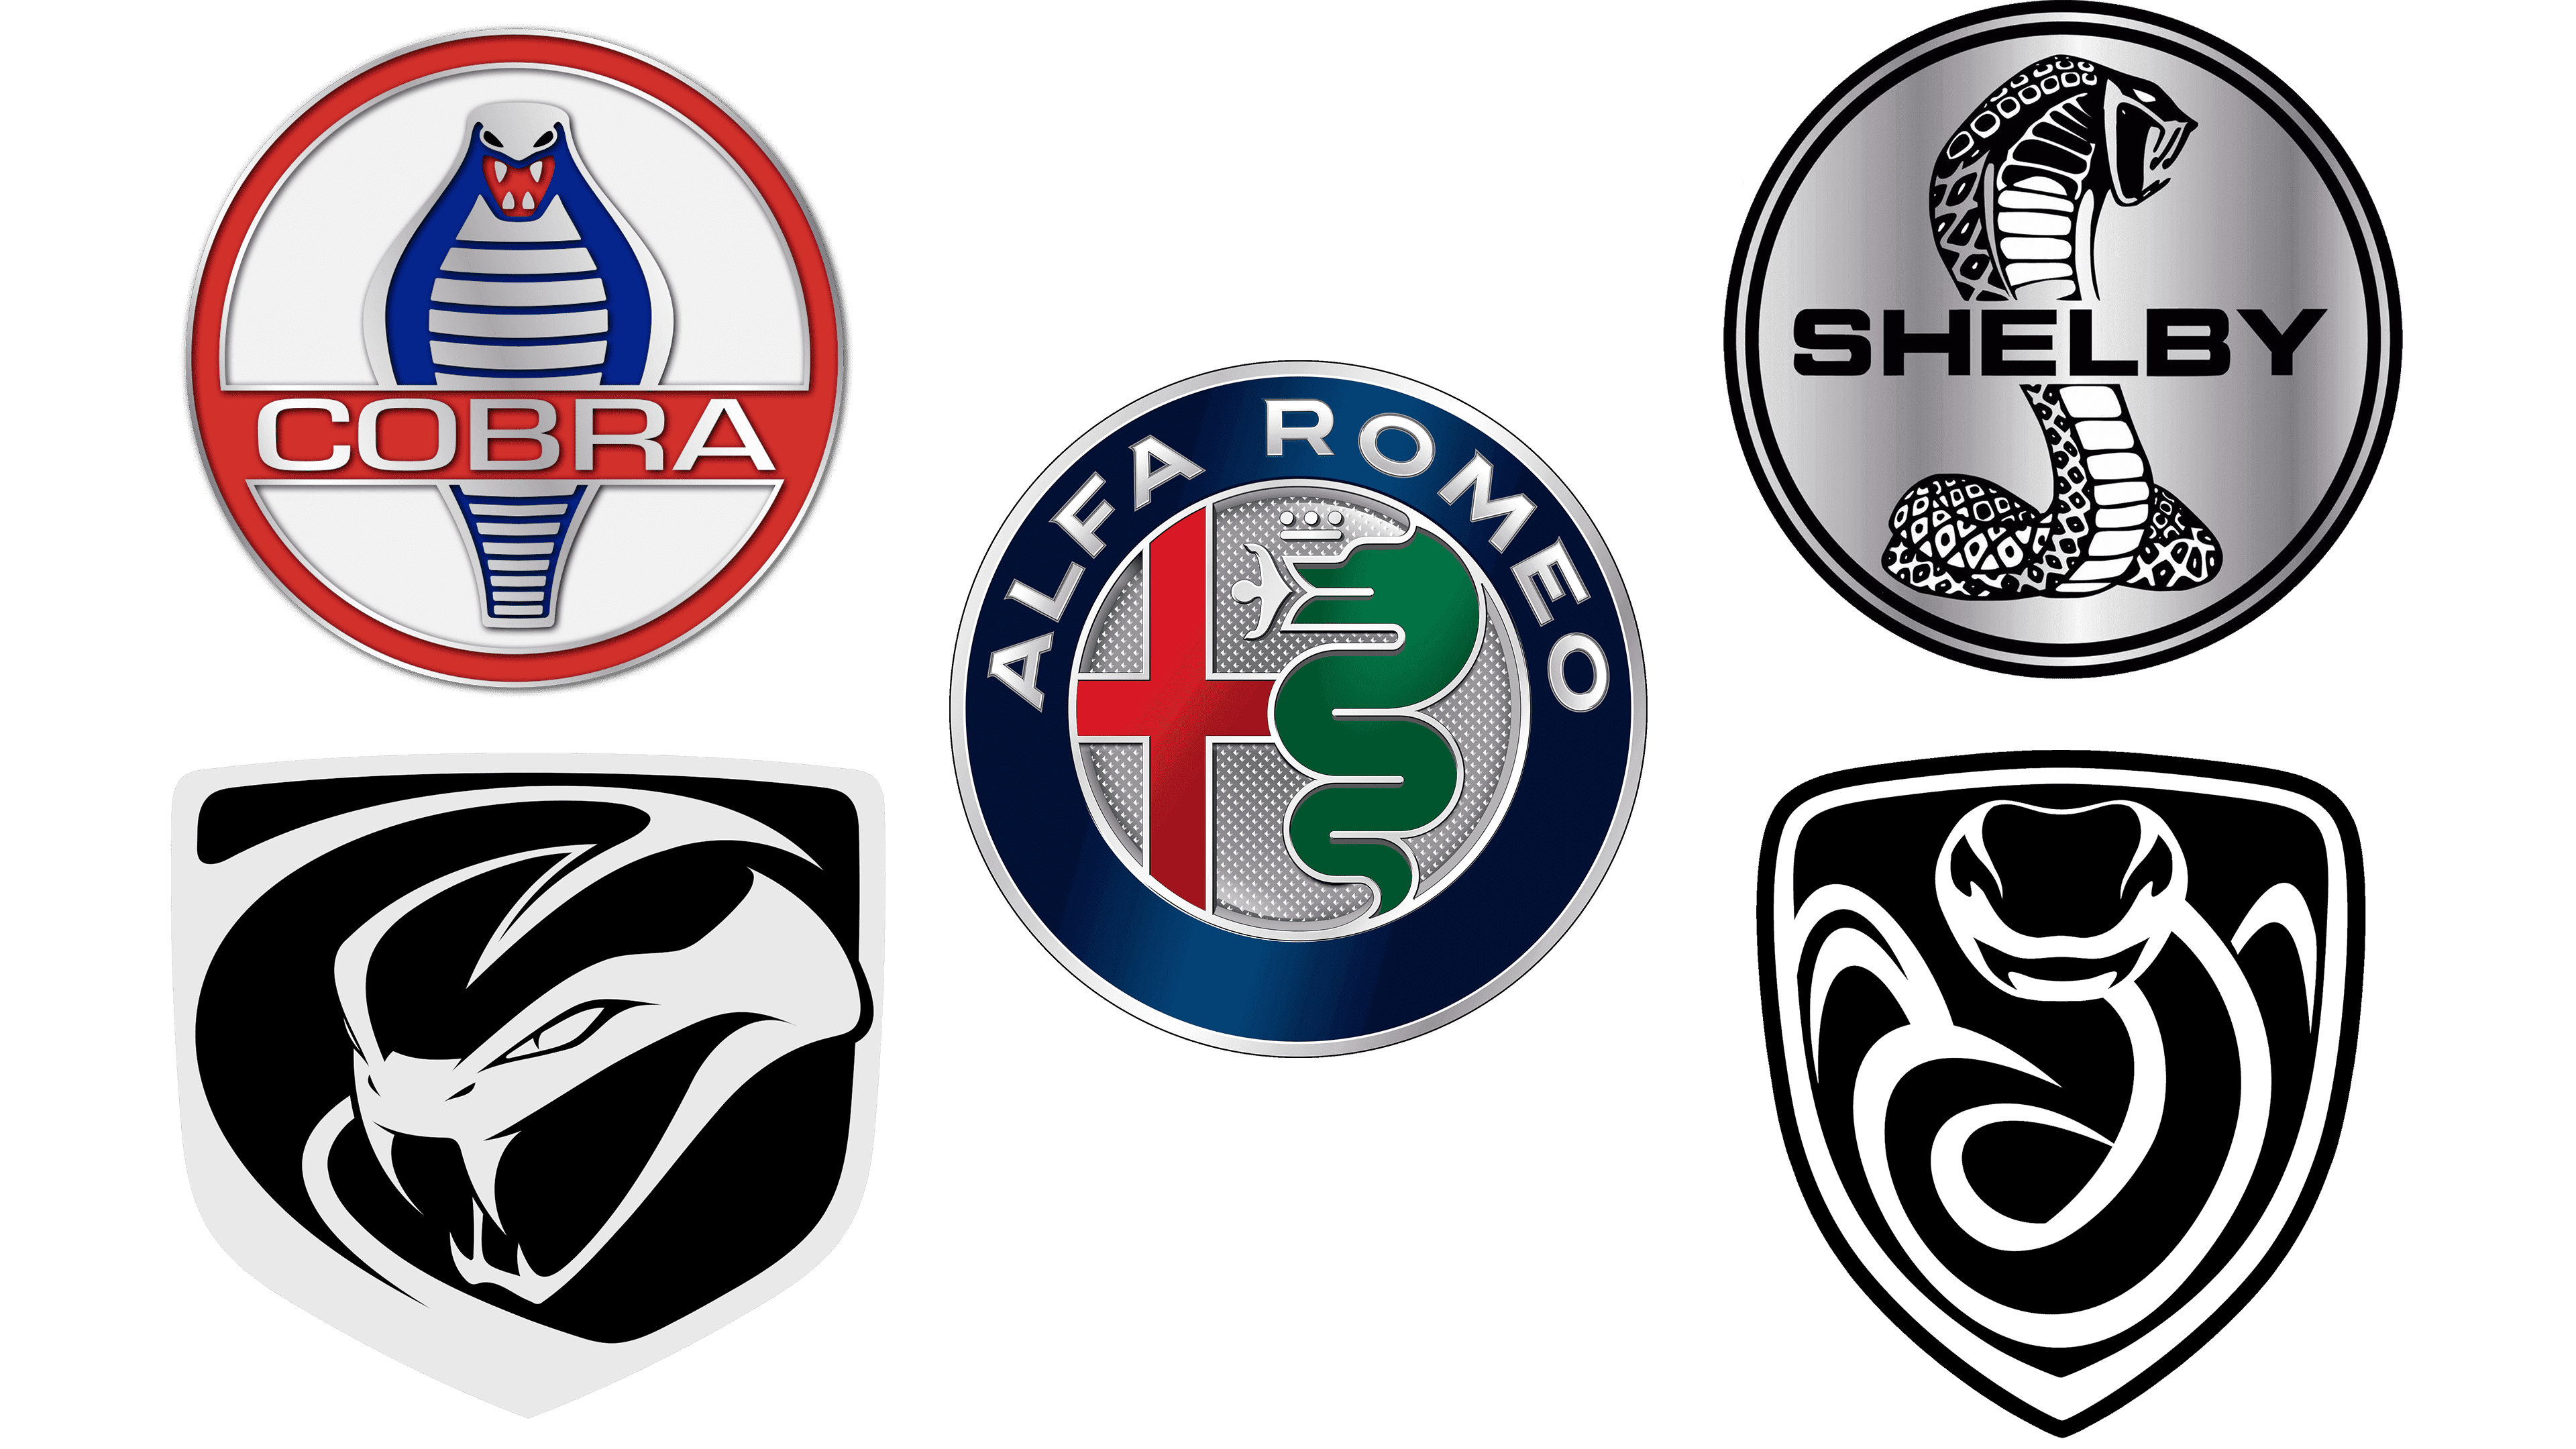 Car logos with Snake